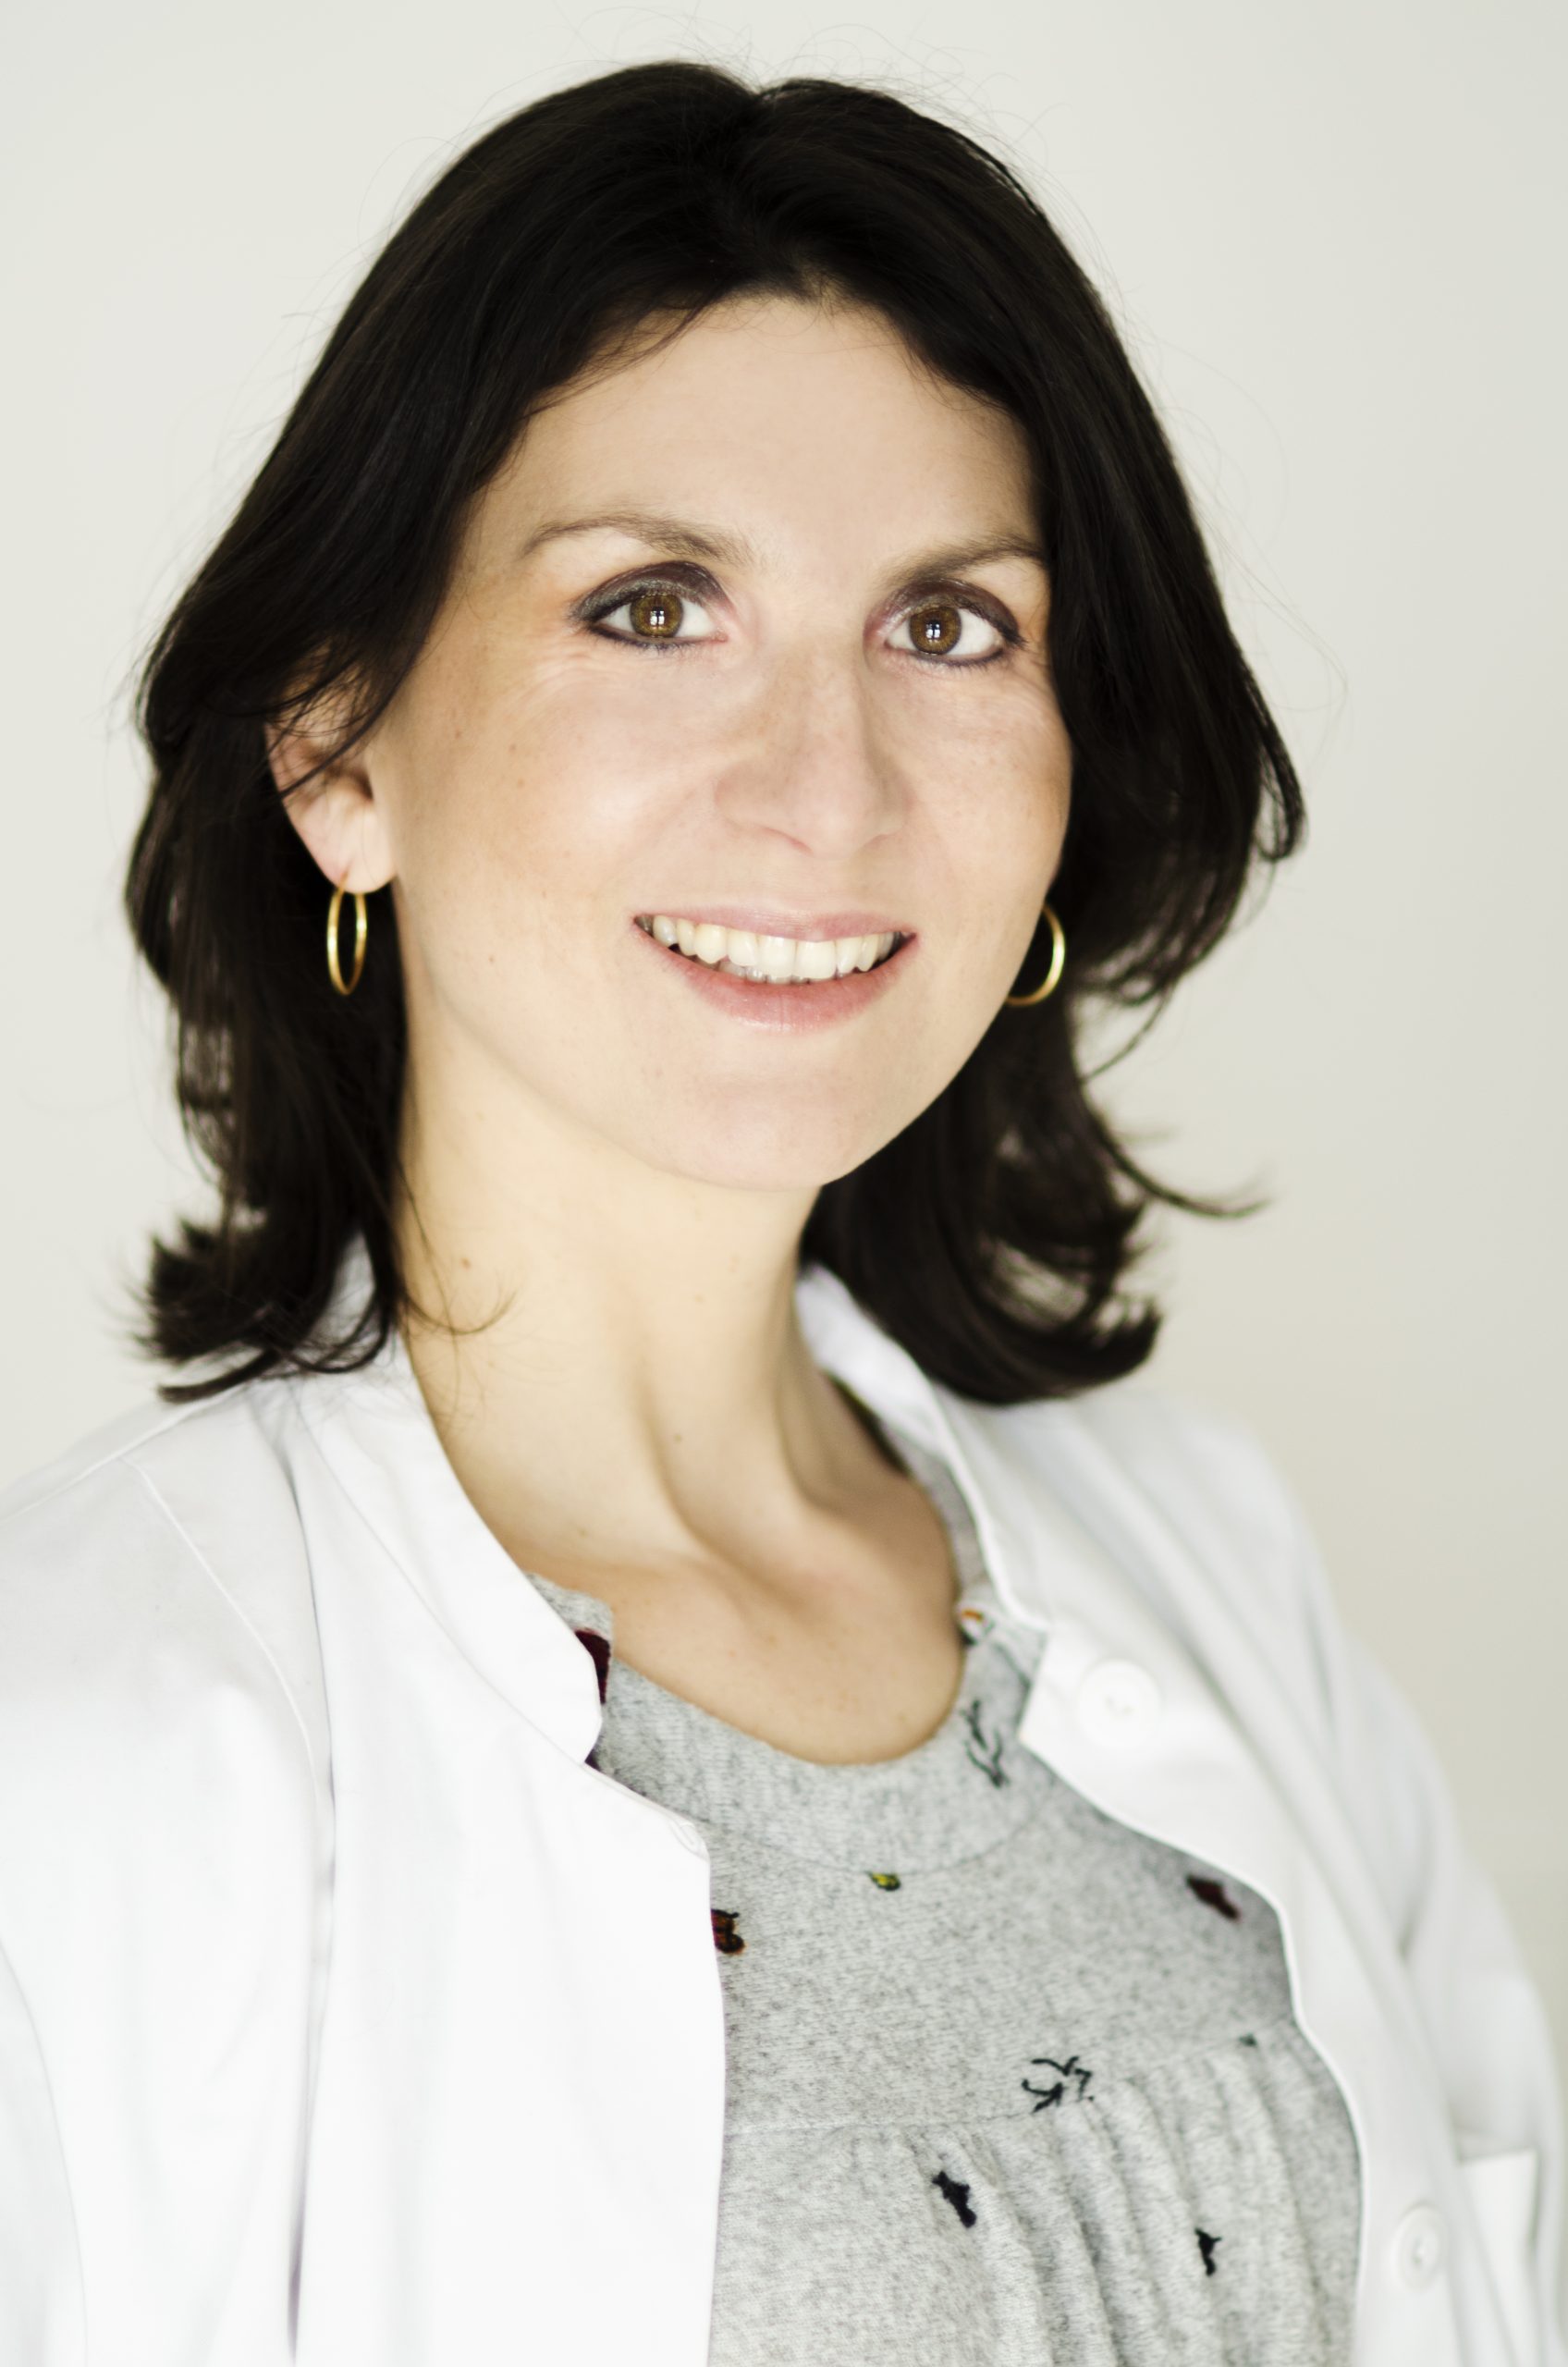 Dr. Freya Vila Jurk ist Internistin in Eppendorf.